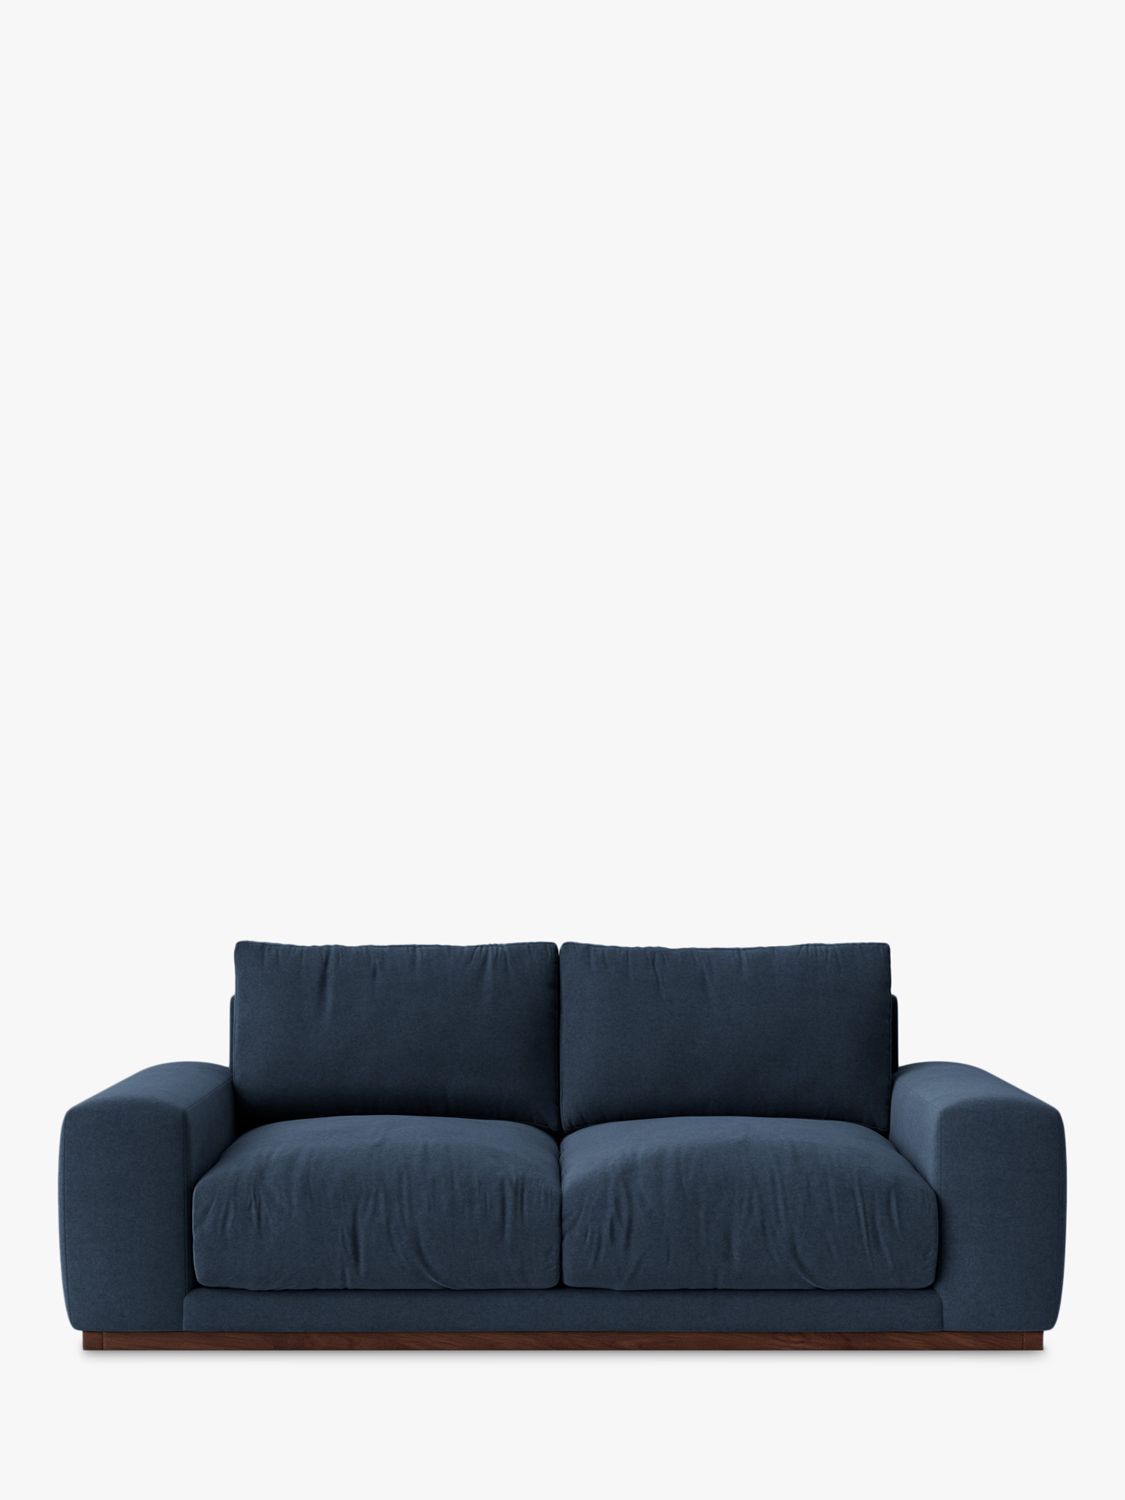 Denver Range, Swoon Denver Medium 2 Seater Sofa, Indigo Wool